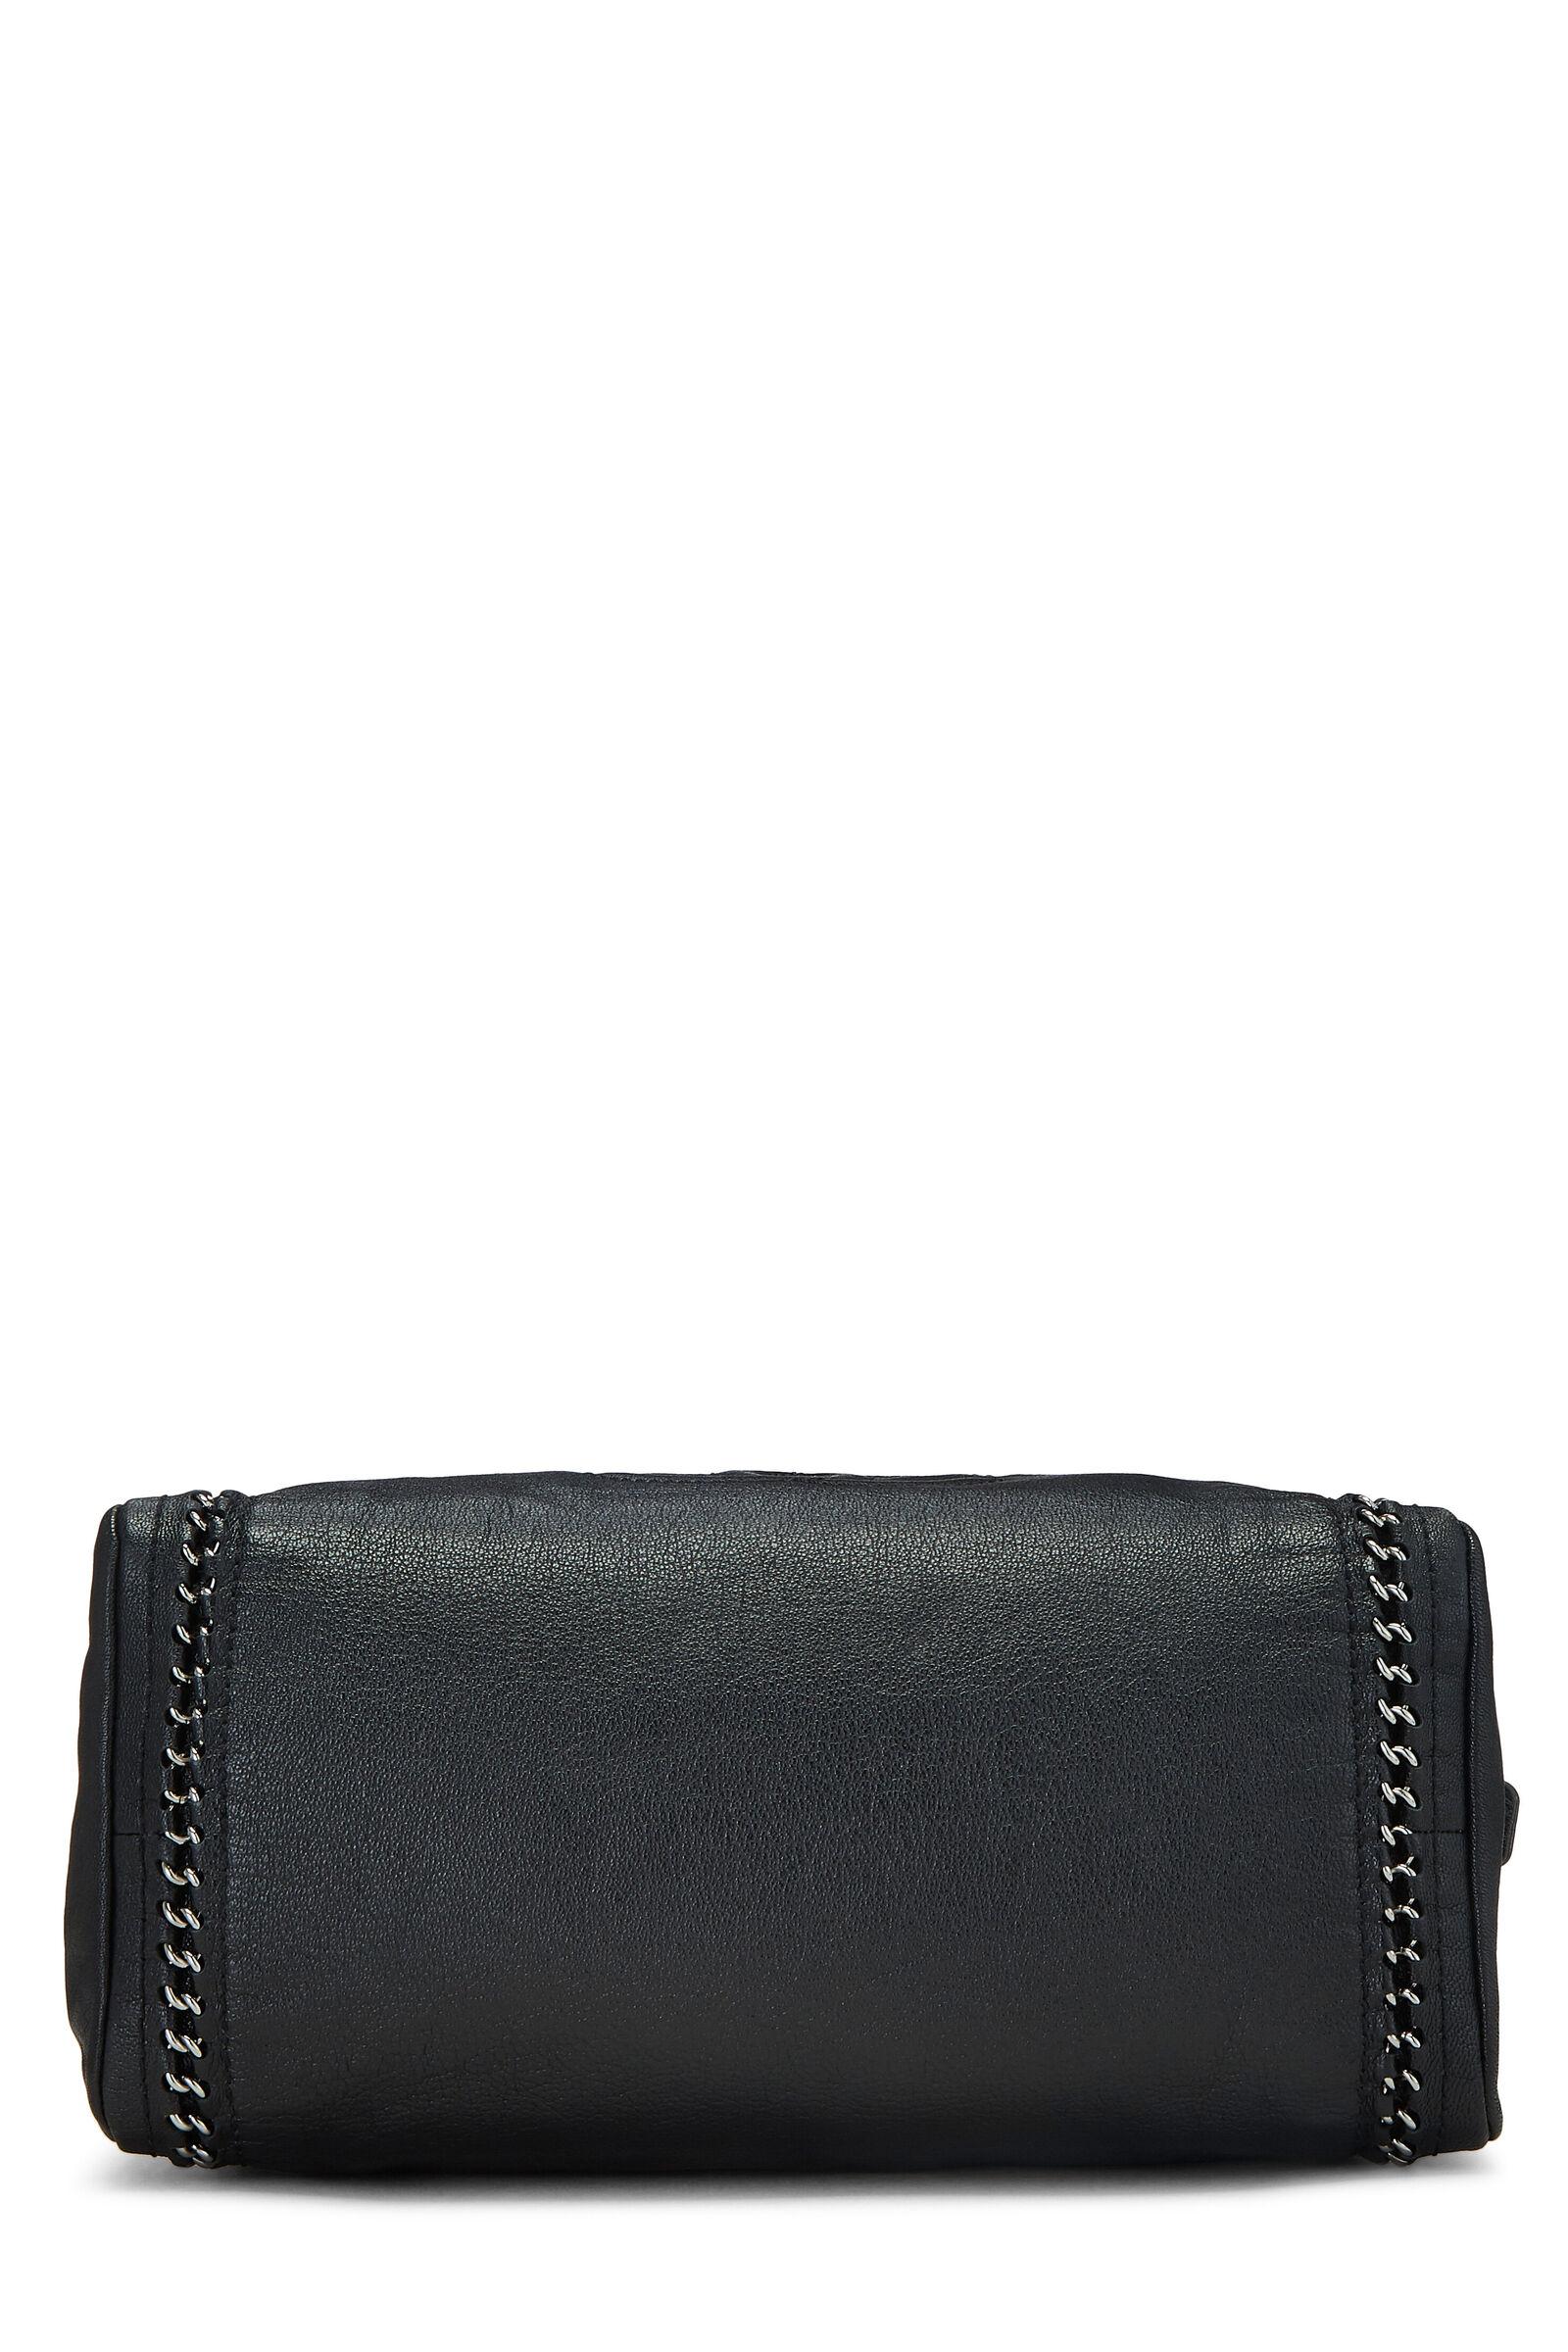 Women's or Men's Chanel Black Bowling Bag Luxury Ligne Leather Lambskin Medium Satchel For Sale